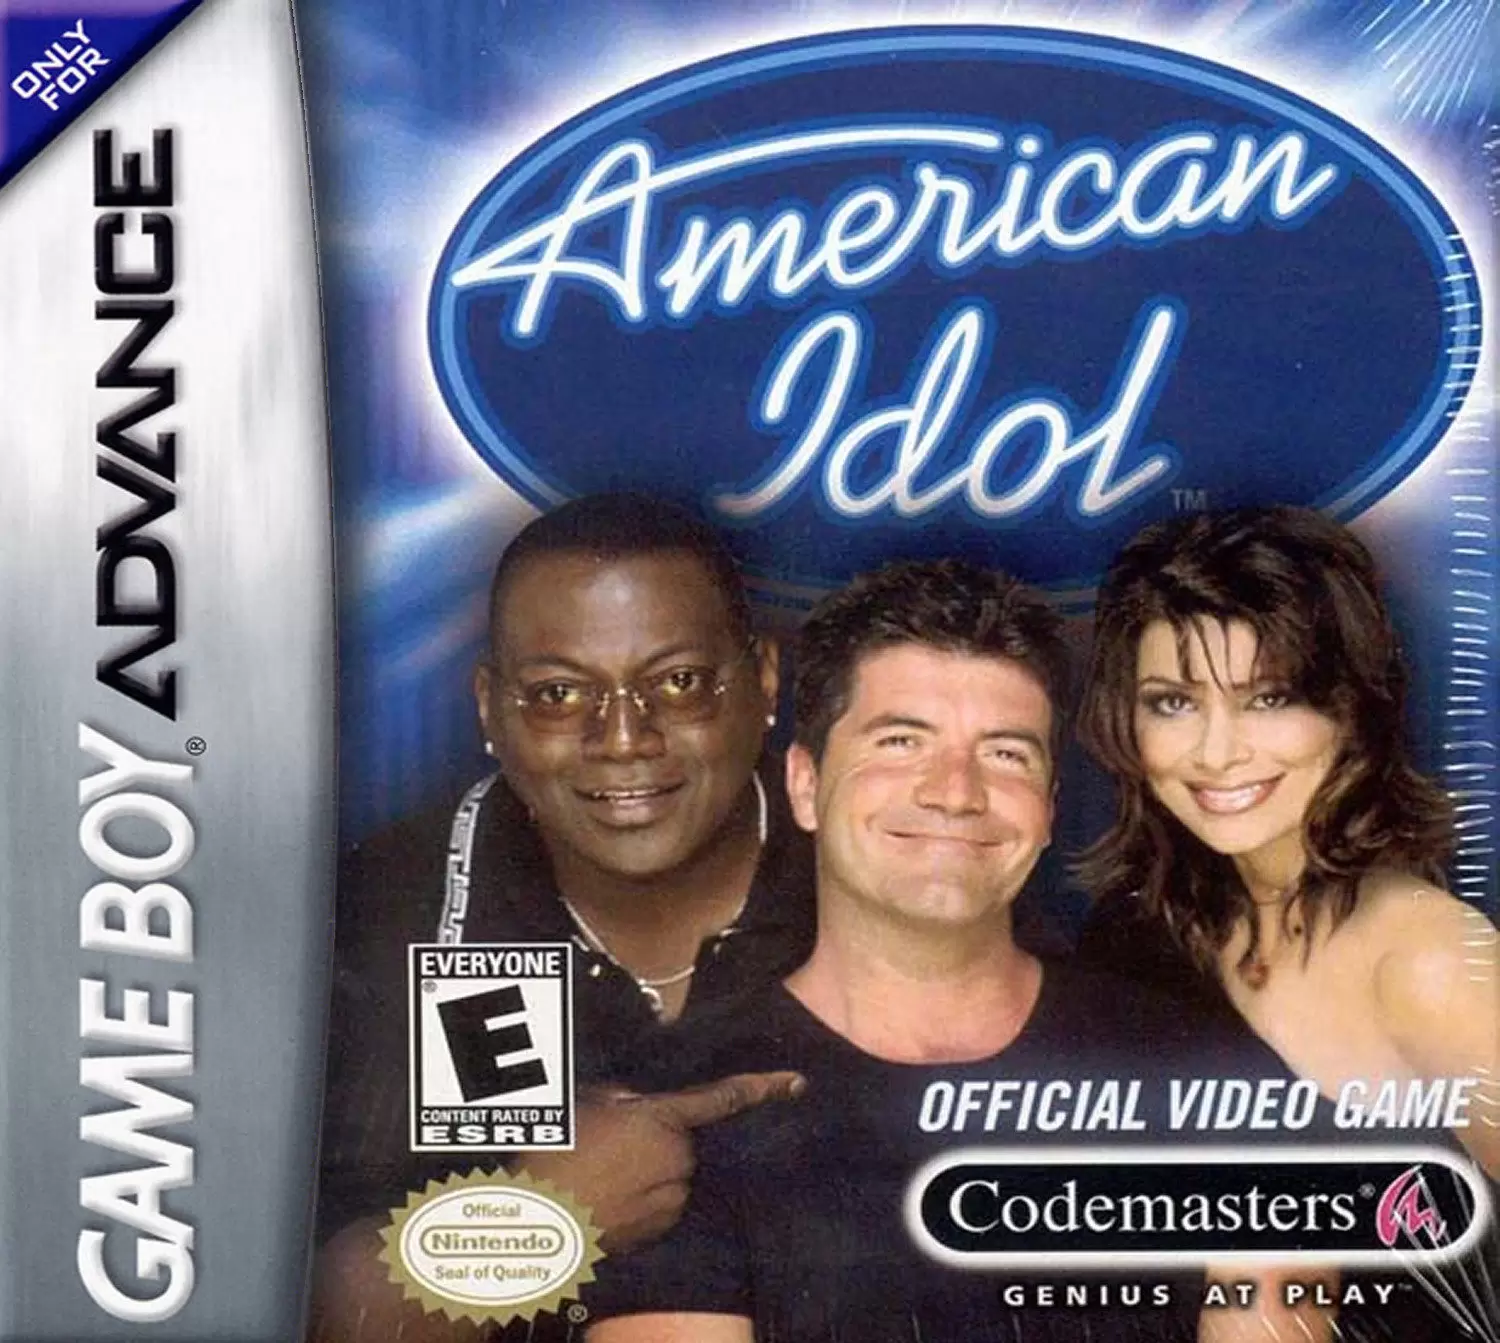 Game Boy Advance Games - American Idol